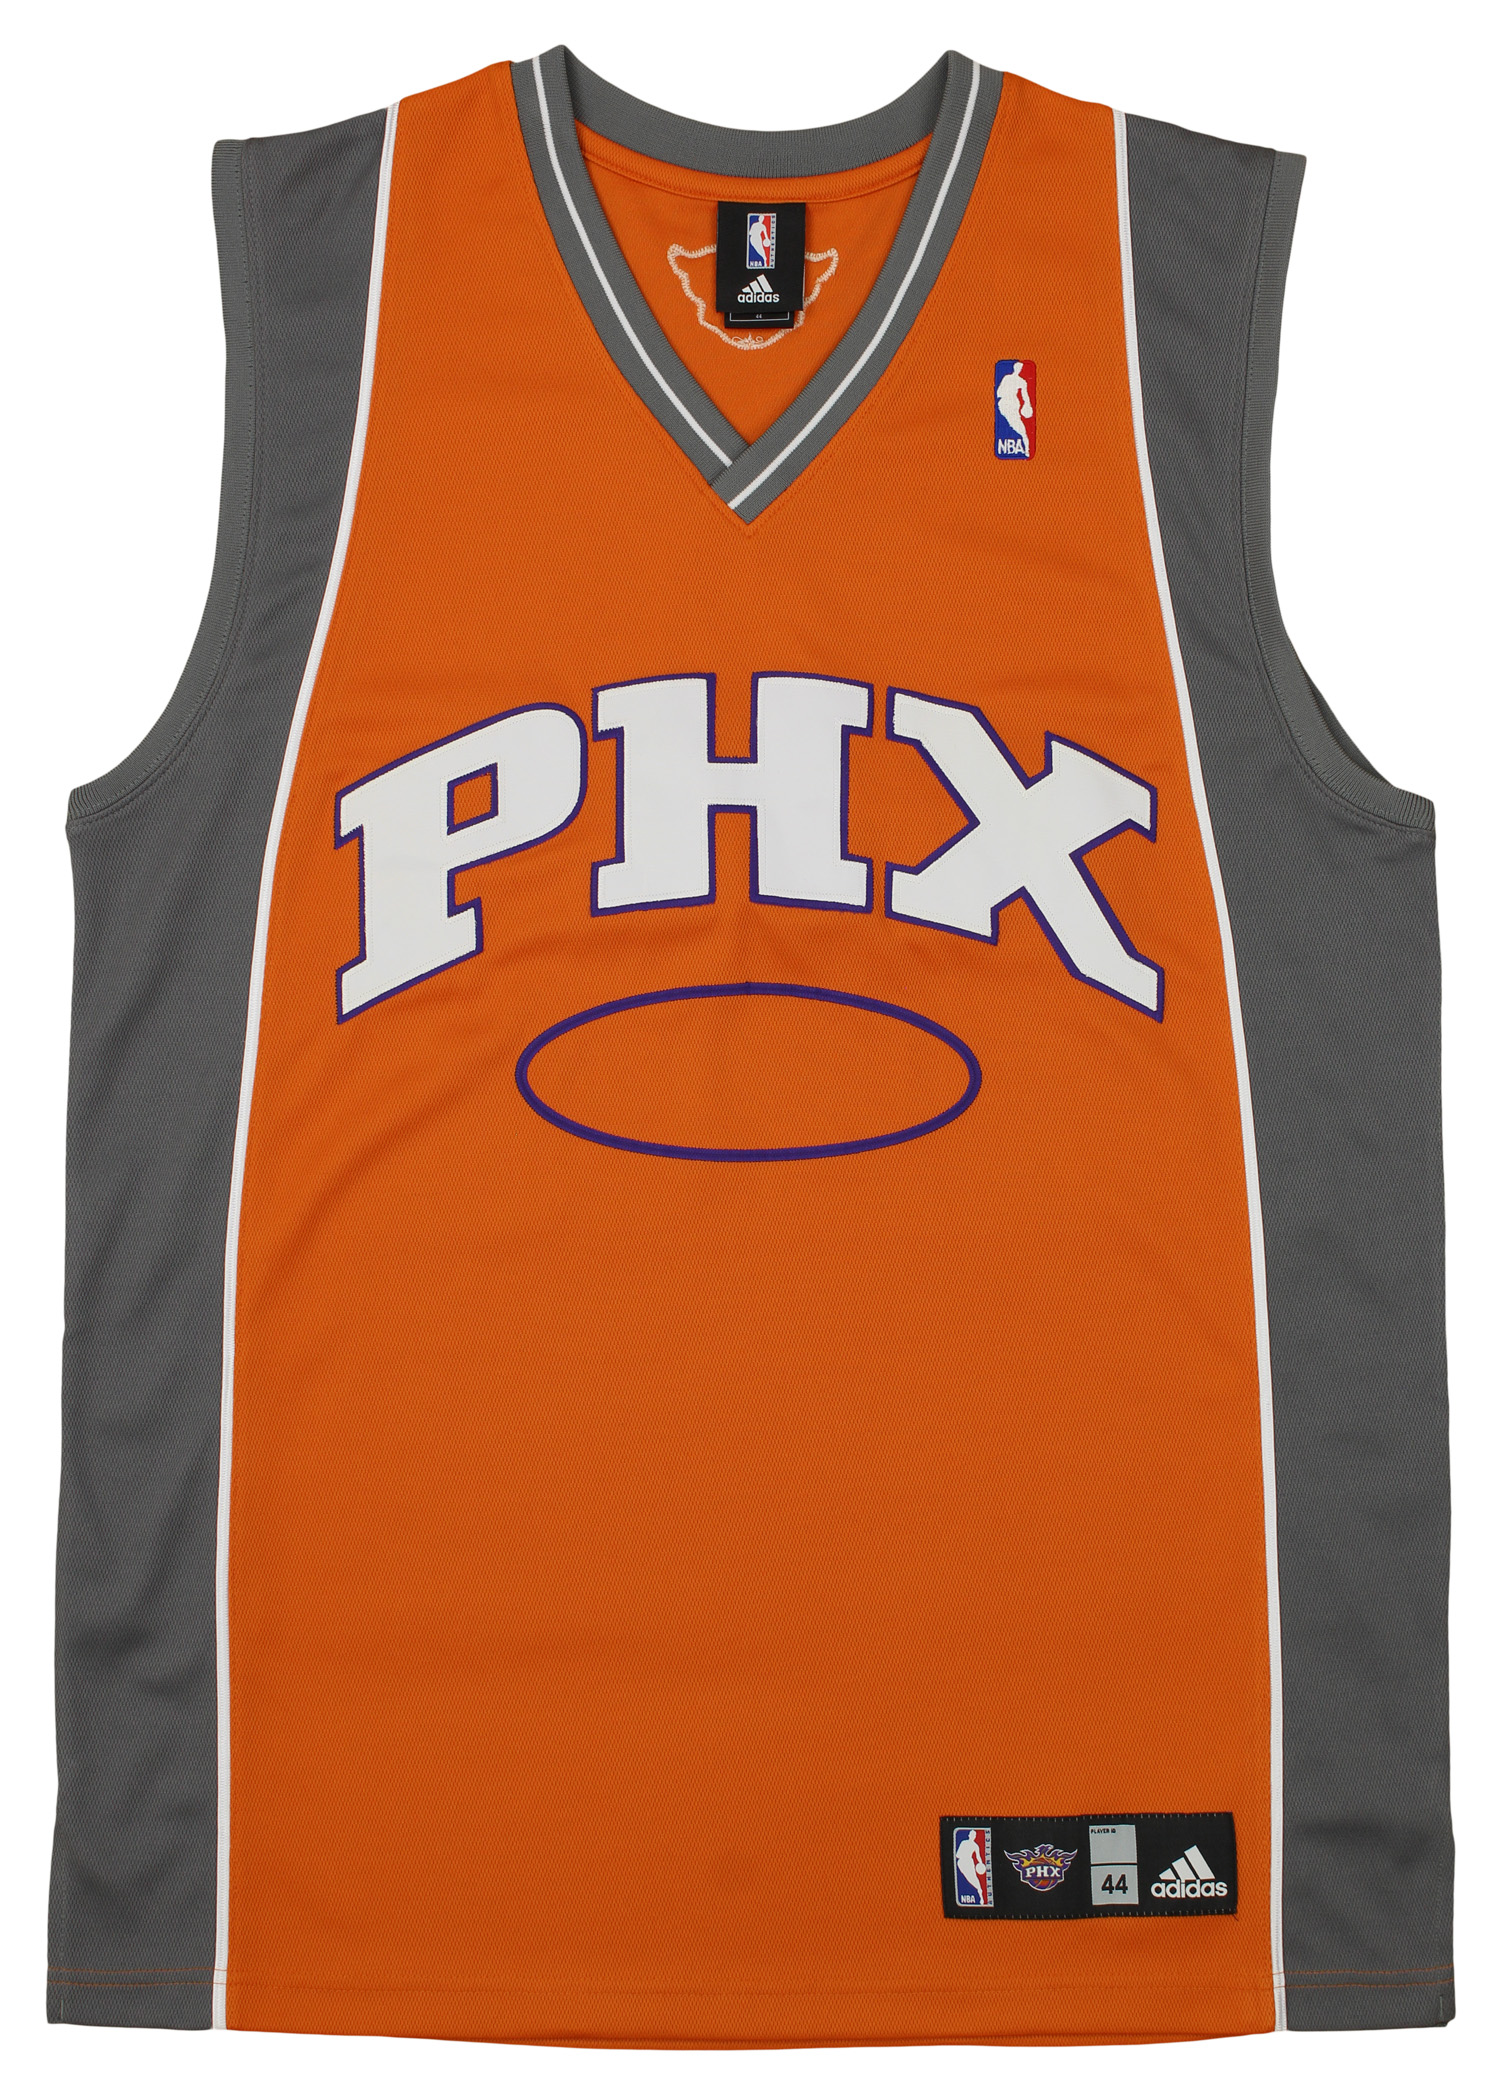 Adidas NBA Men's Phoenix Suns Blank Basketball Jersey, Orange eBay